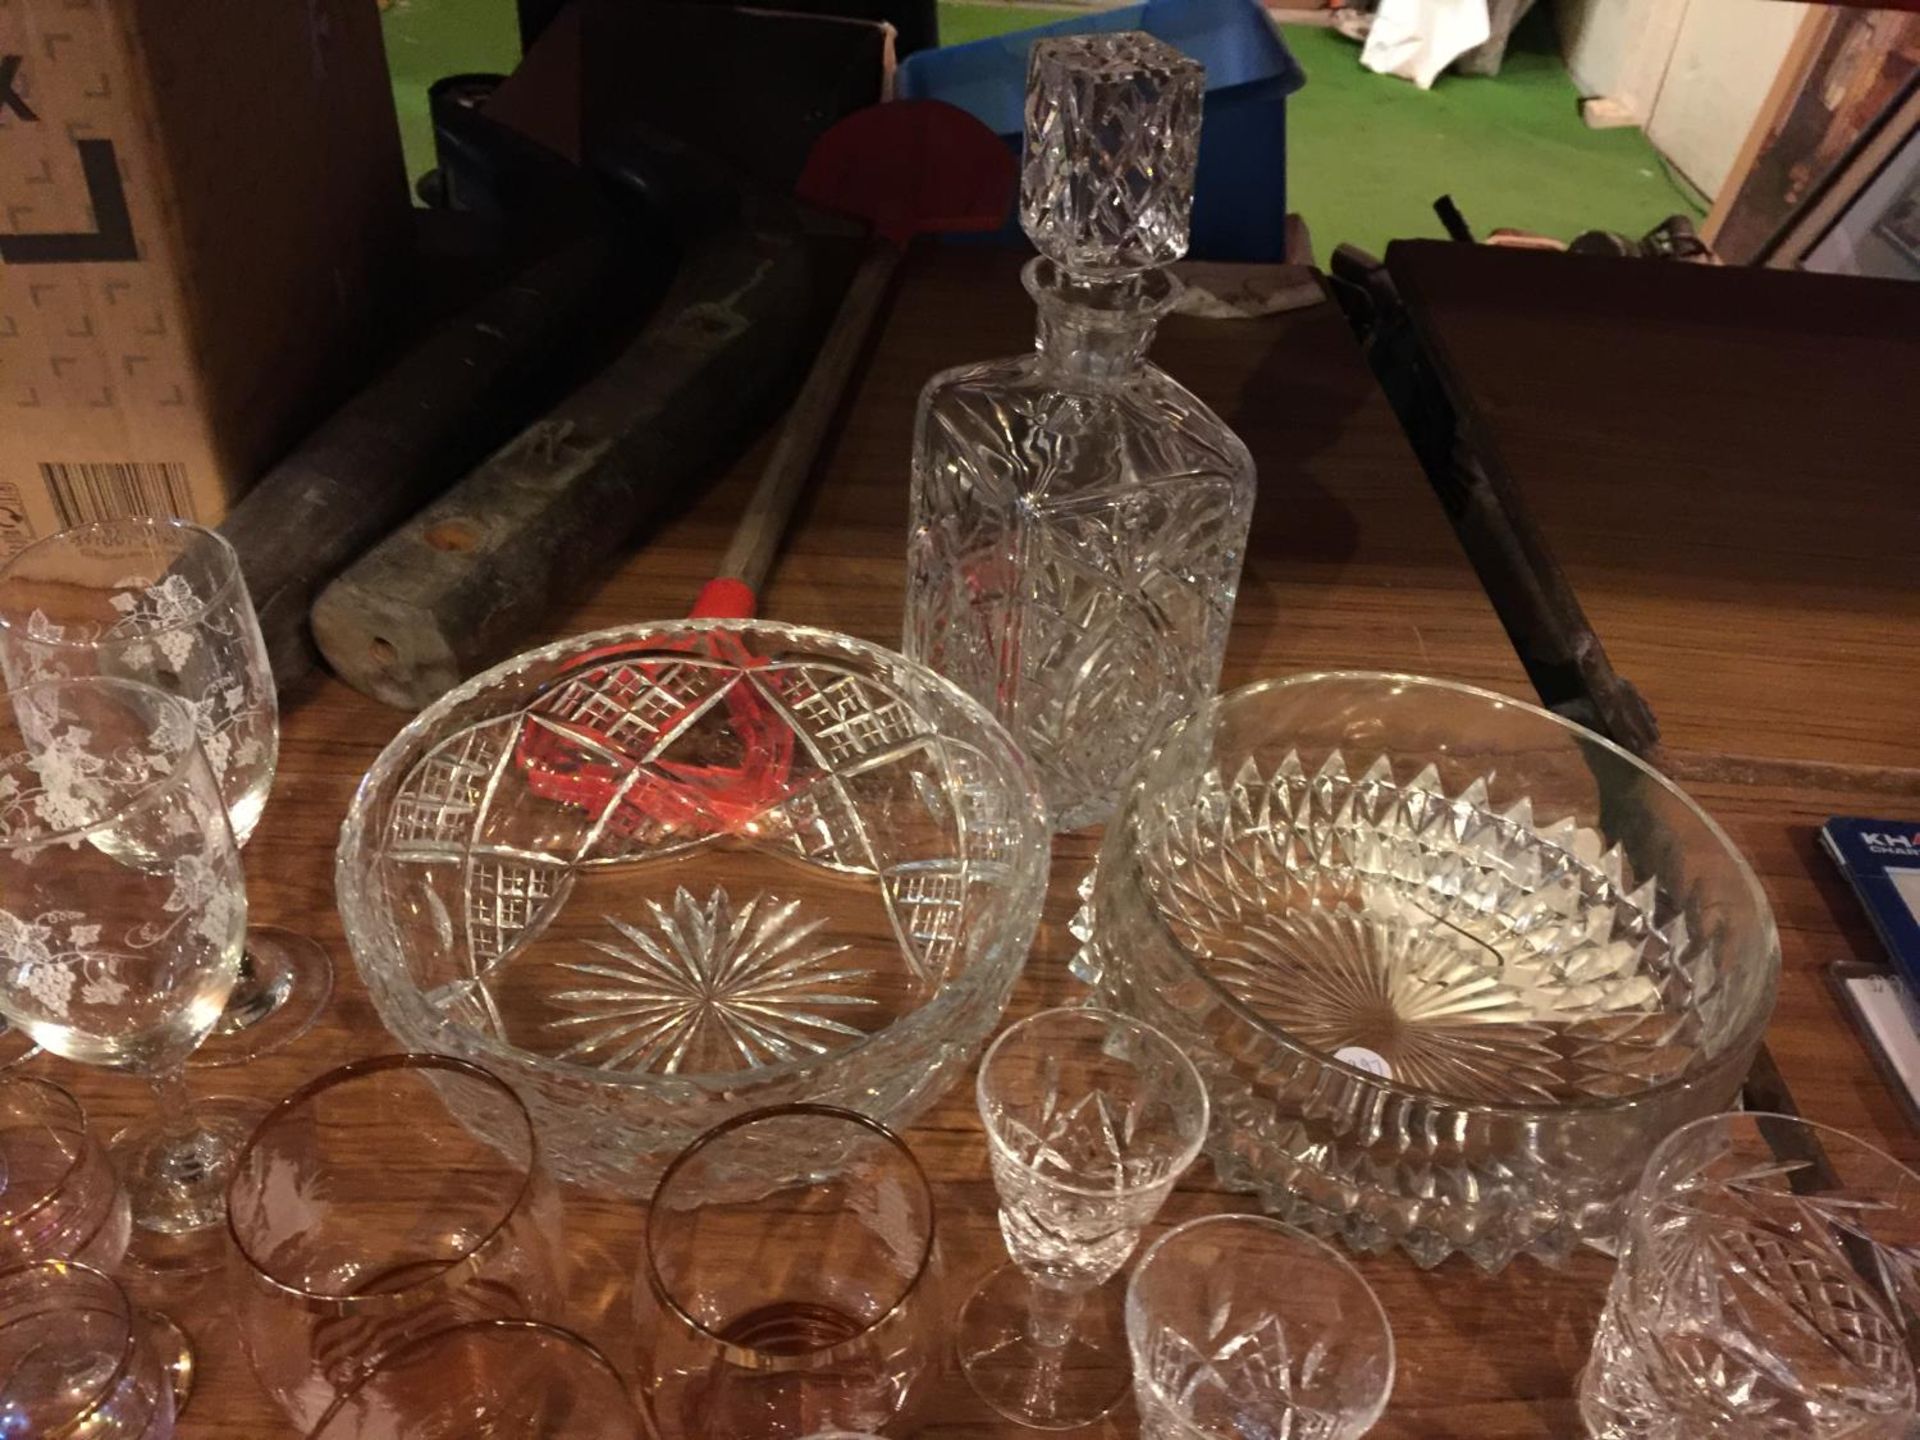 A QUANTITY OF GLASSES TO INCLUDE WINE, SHERRY, LIQUOR, BOWLS, DECANTER, ETC - Image 4 of 4